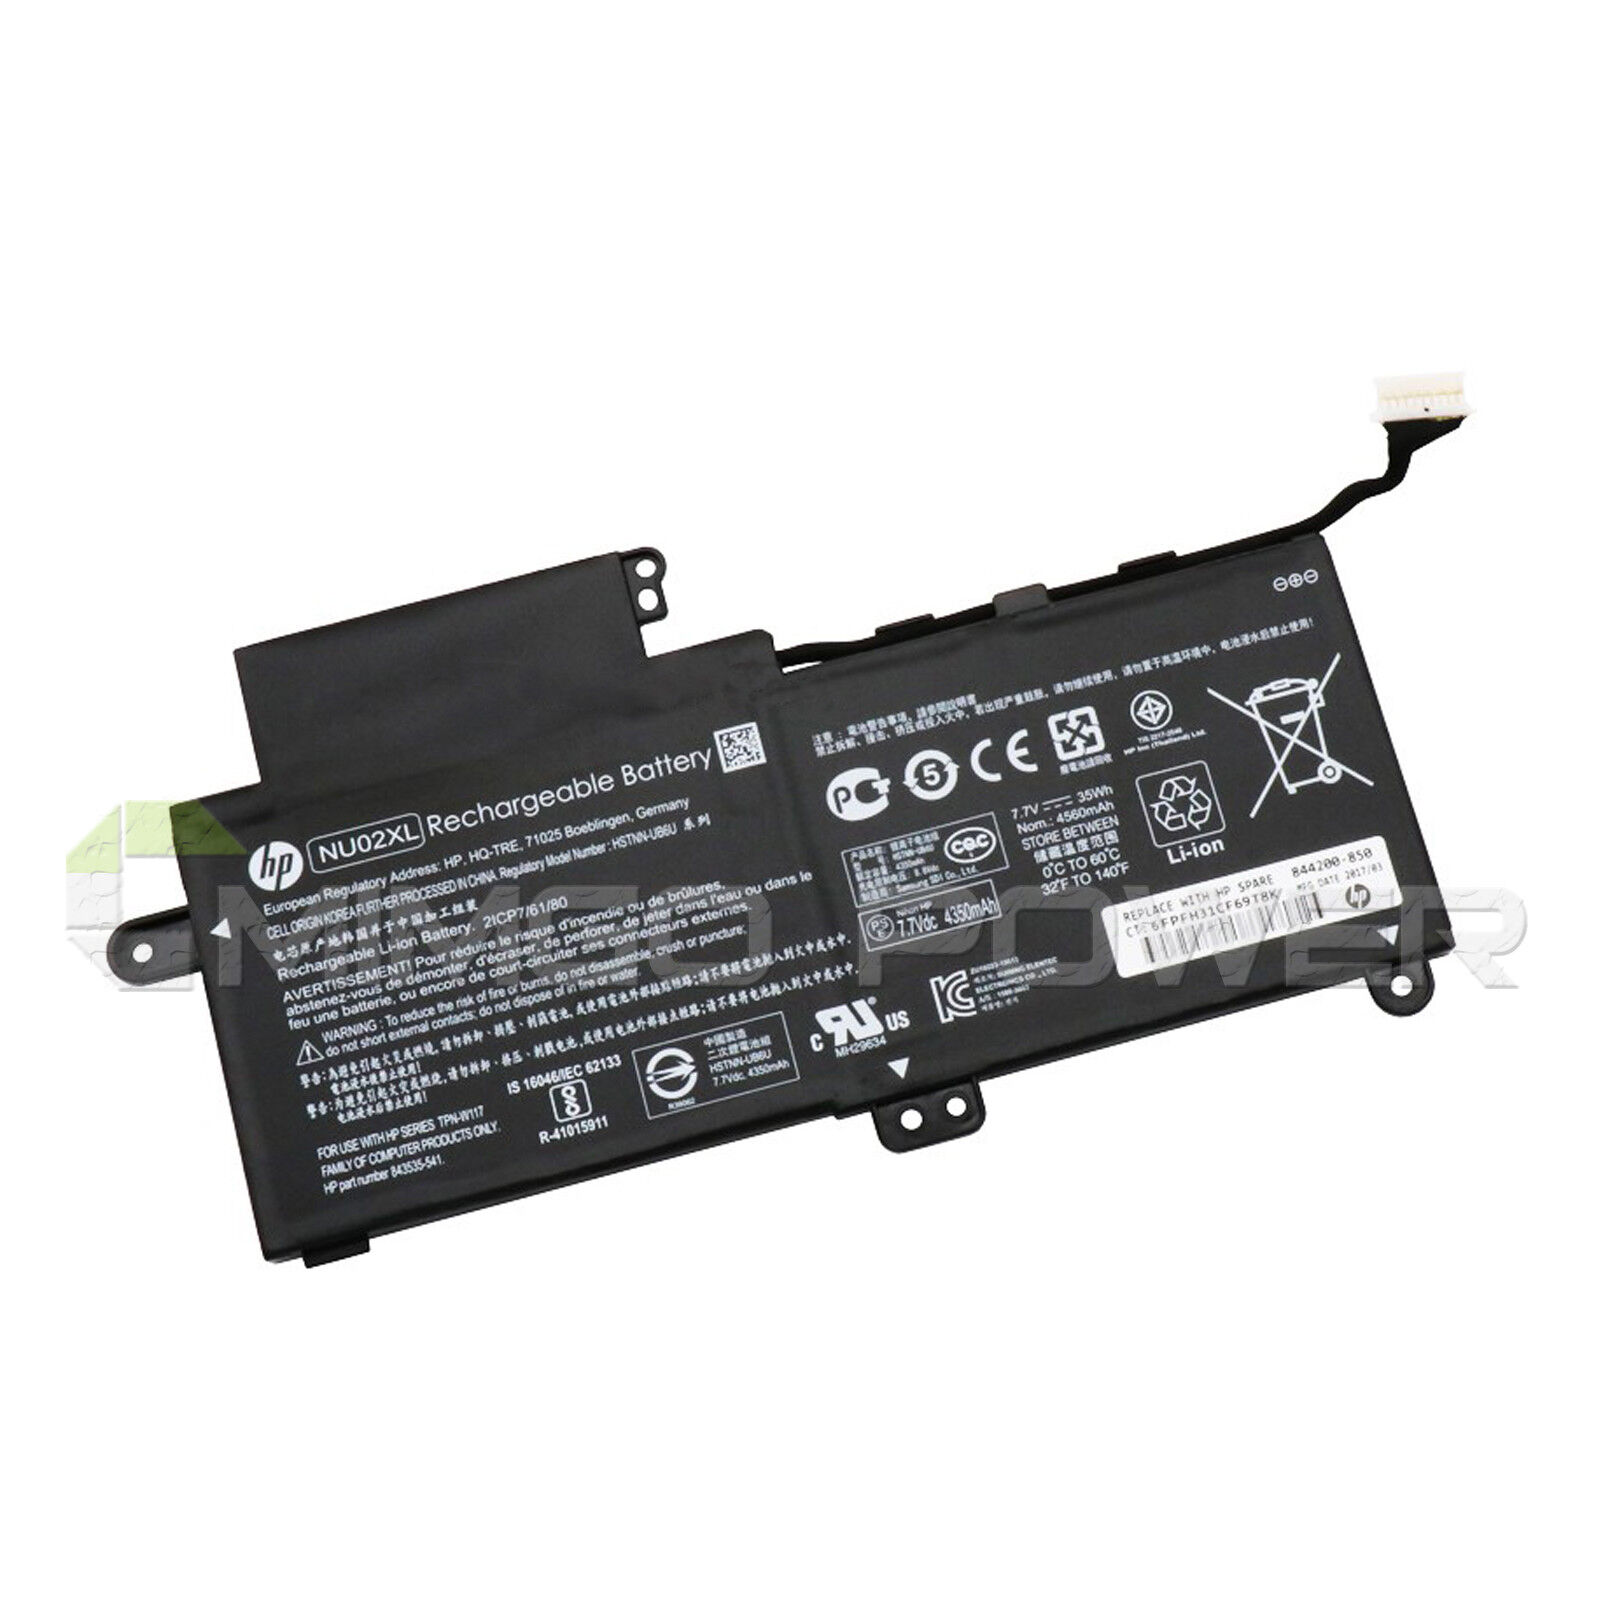 Genuine NU02XL Battery for HP Pavillion X360 M1 TPN-W117 843535-541 HSTNN-UB6U